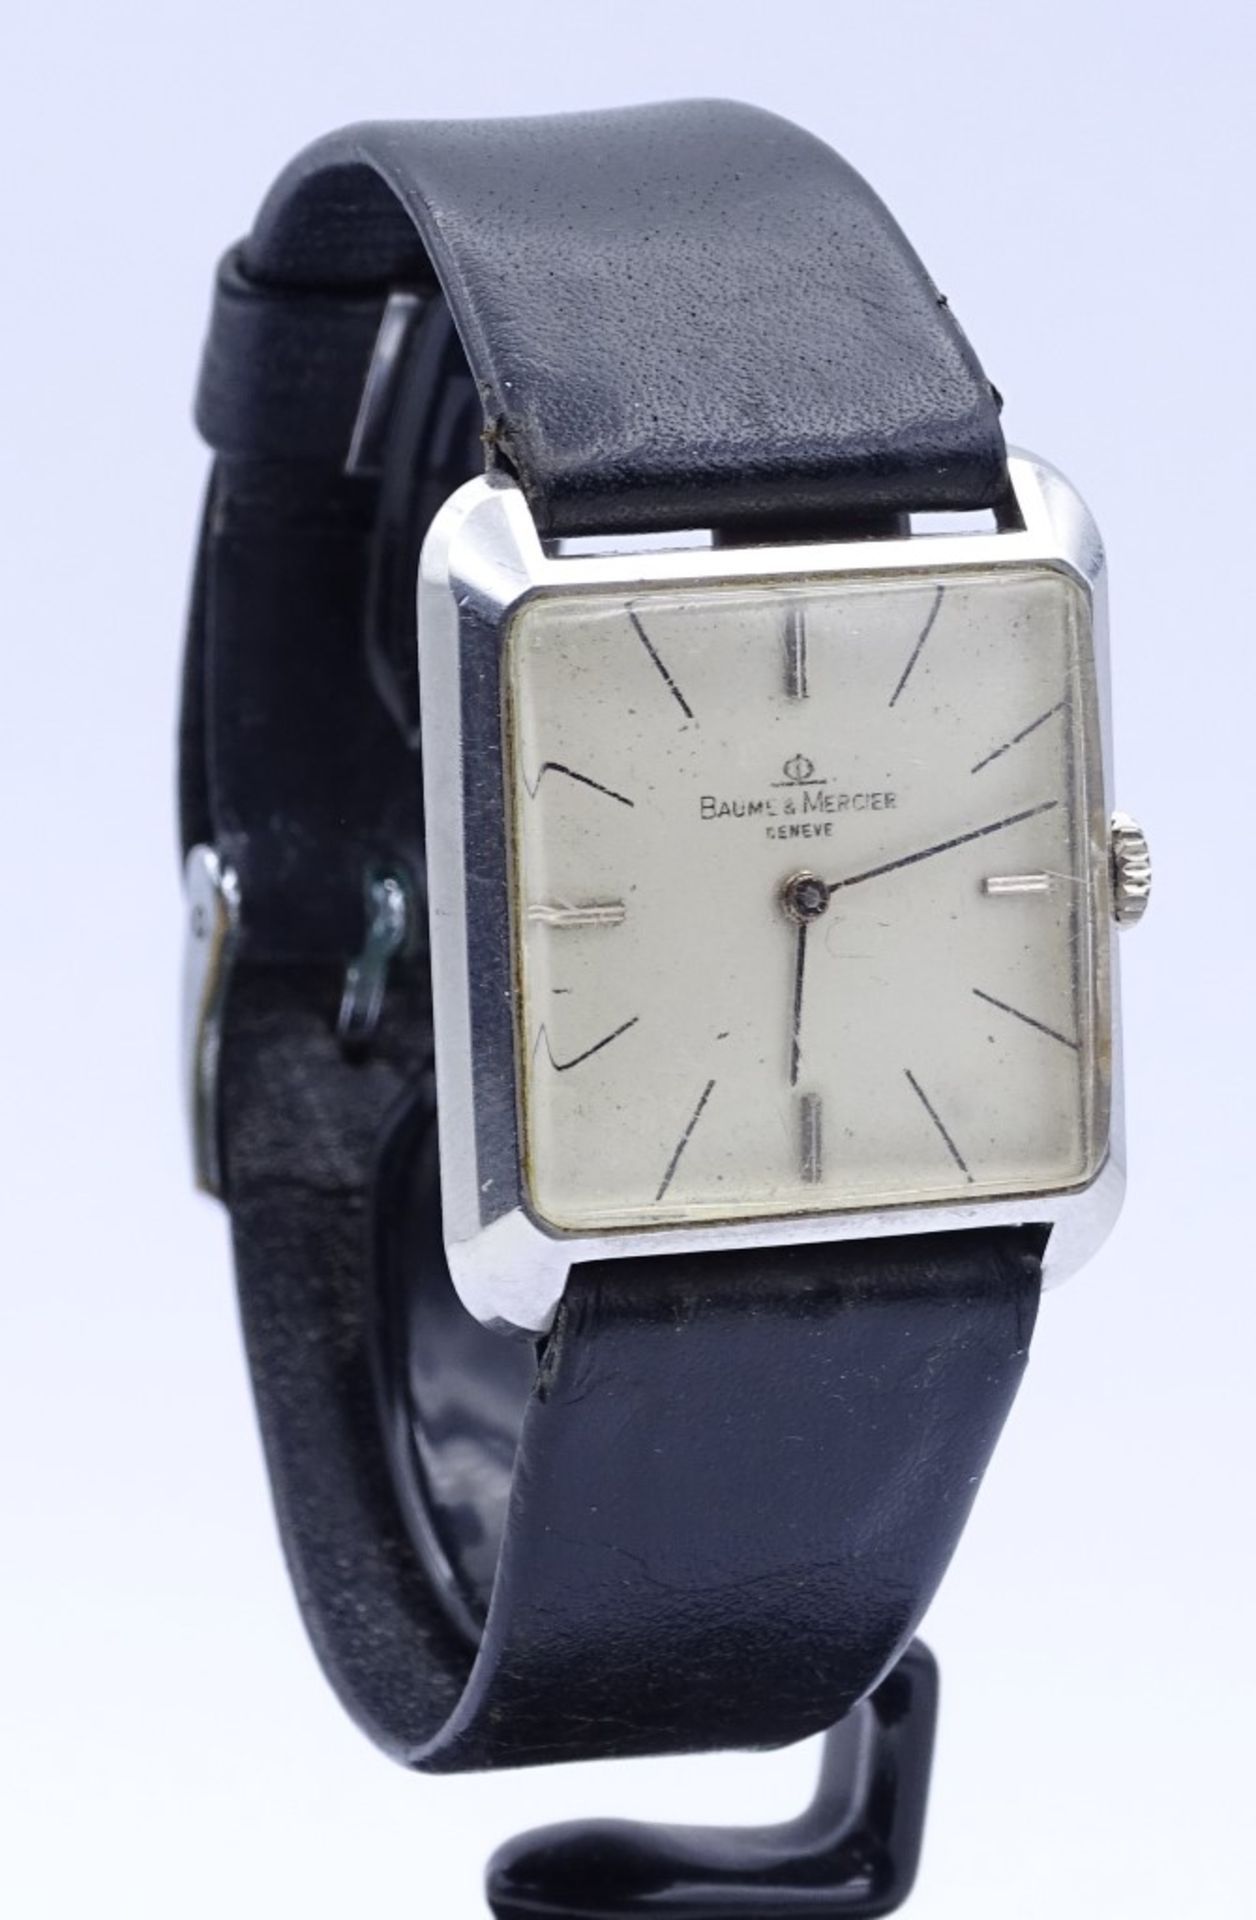 Vintage Armbanduhr "Baume & Mercier", Cal. 320, mechanisch (Handaufzug),Werk läuft,